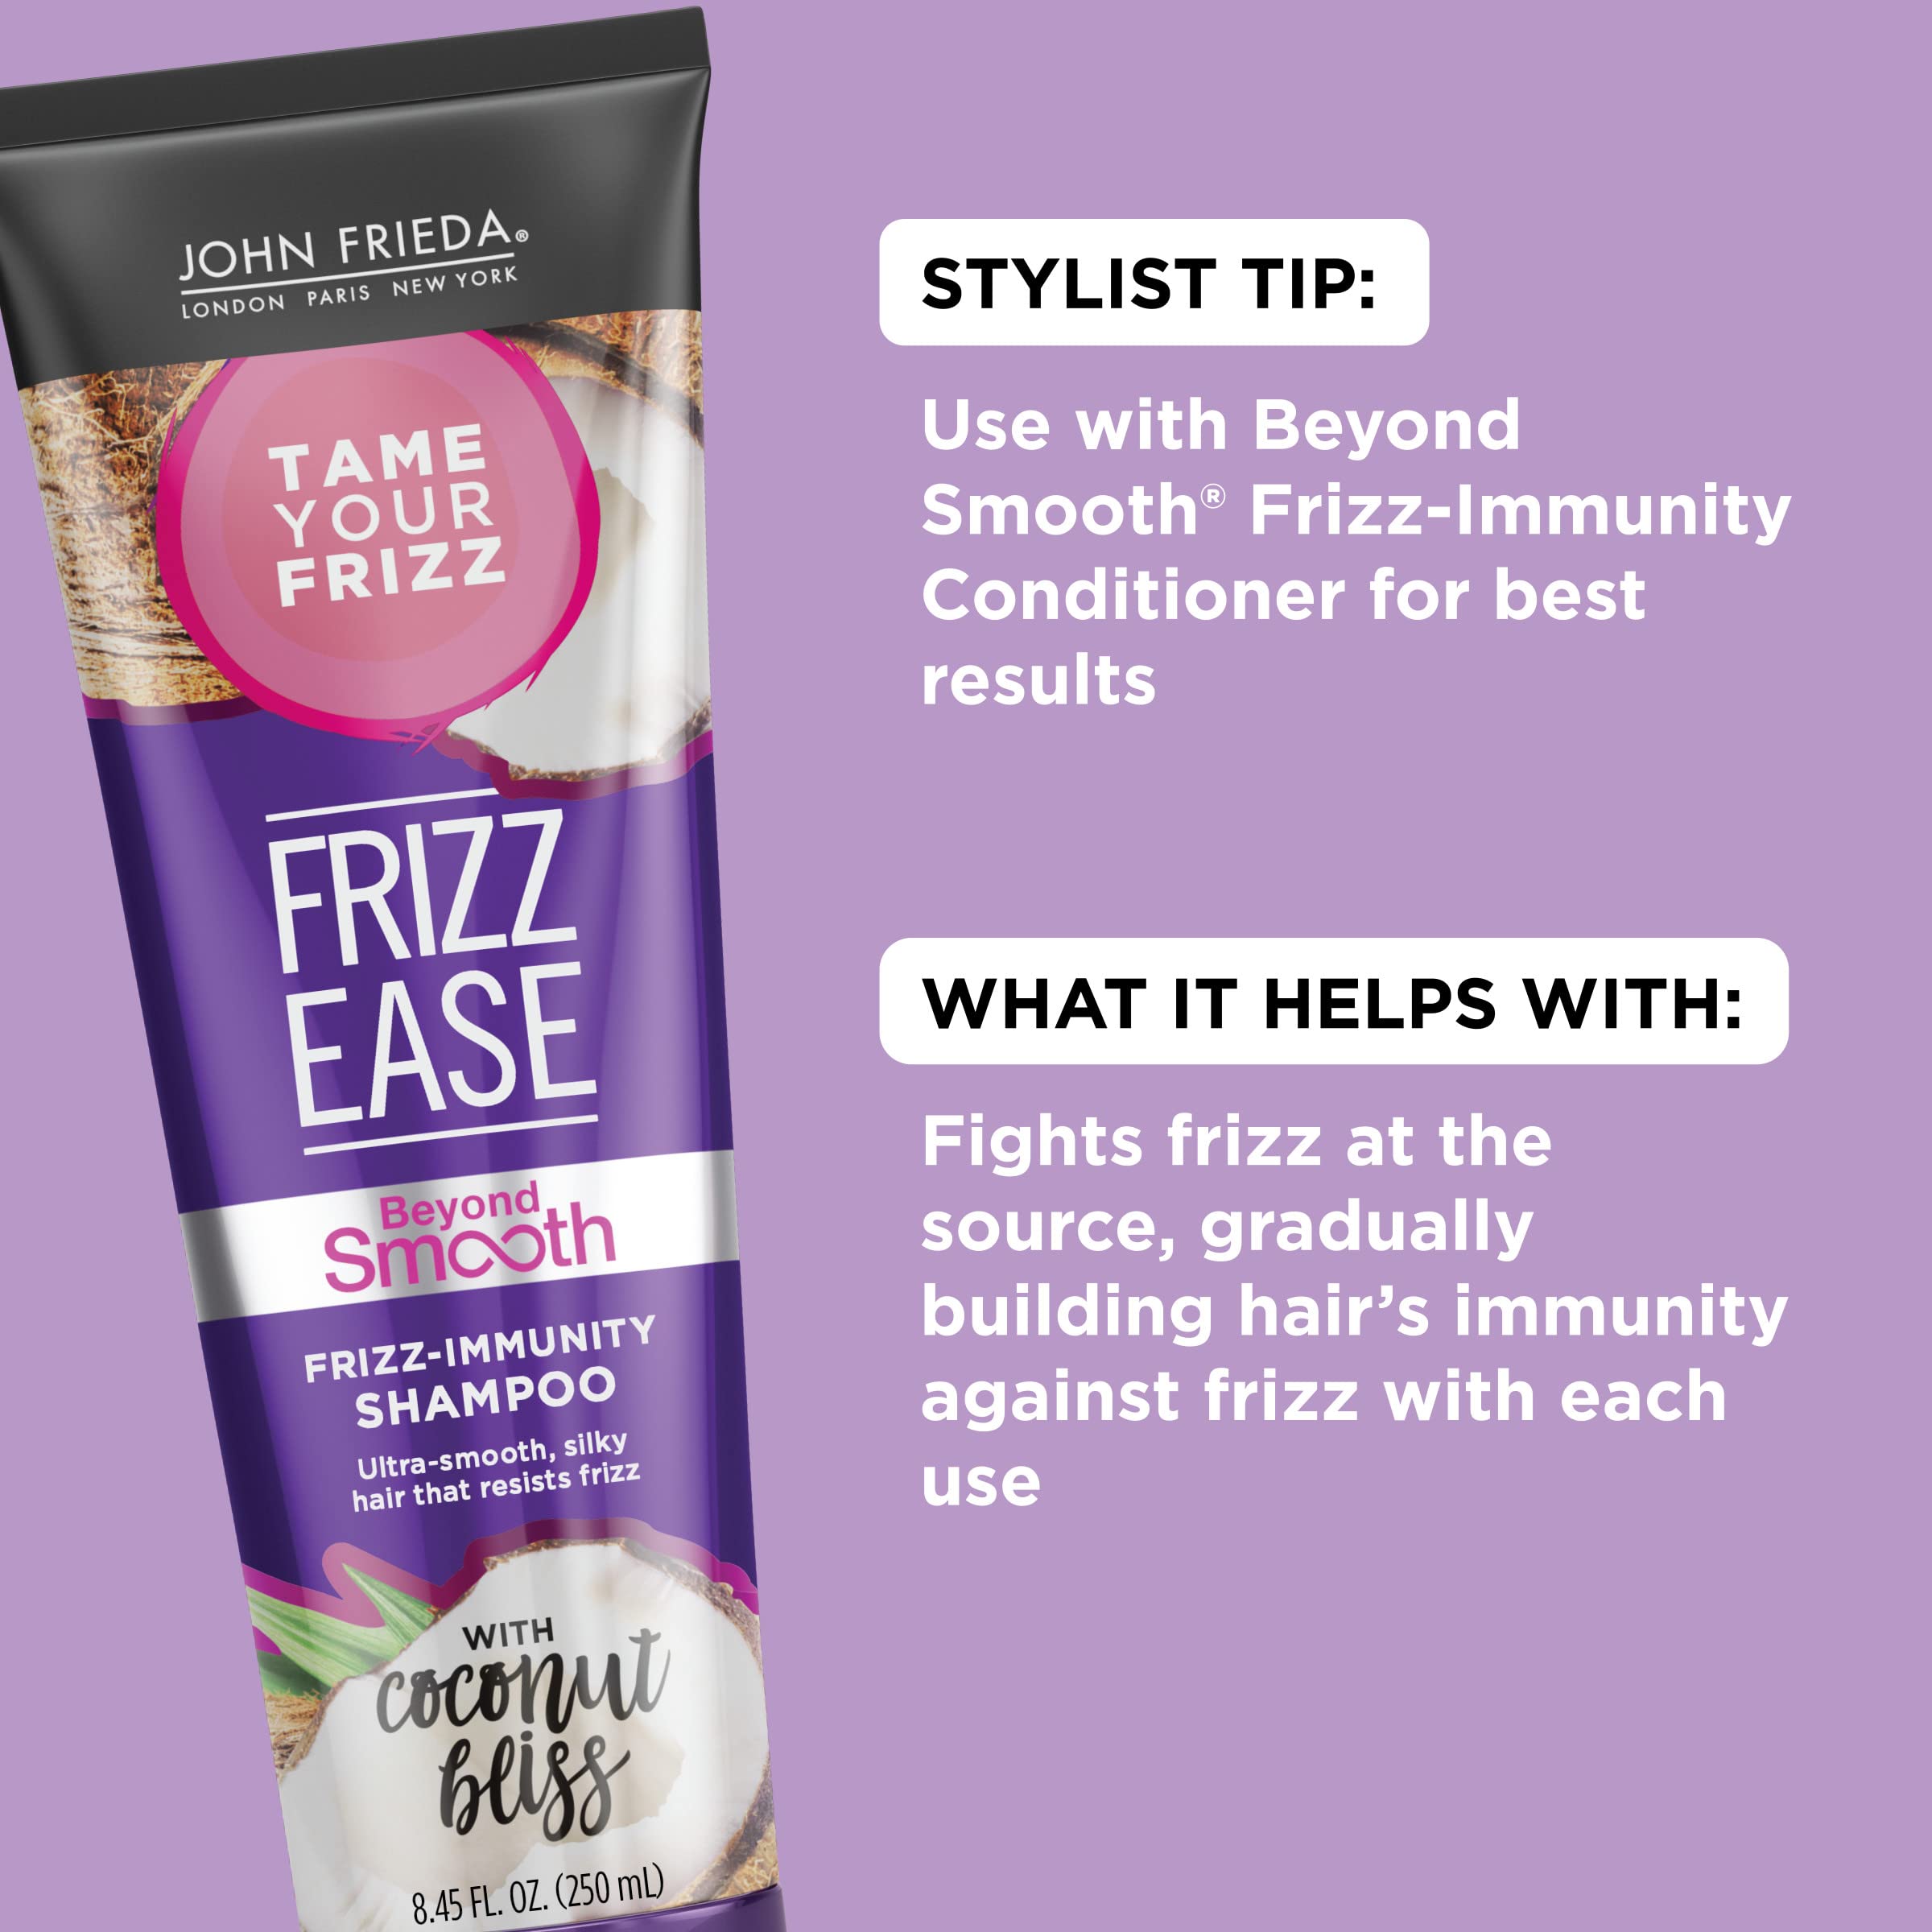 John Frieda Frizz Ease Beyond Smooth Frizz-Immunity Shampoo, Anti-Humidity Shampoo, Prevents Frizz, 8.45 Ounces, with Pure Coconut Oil